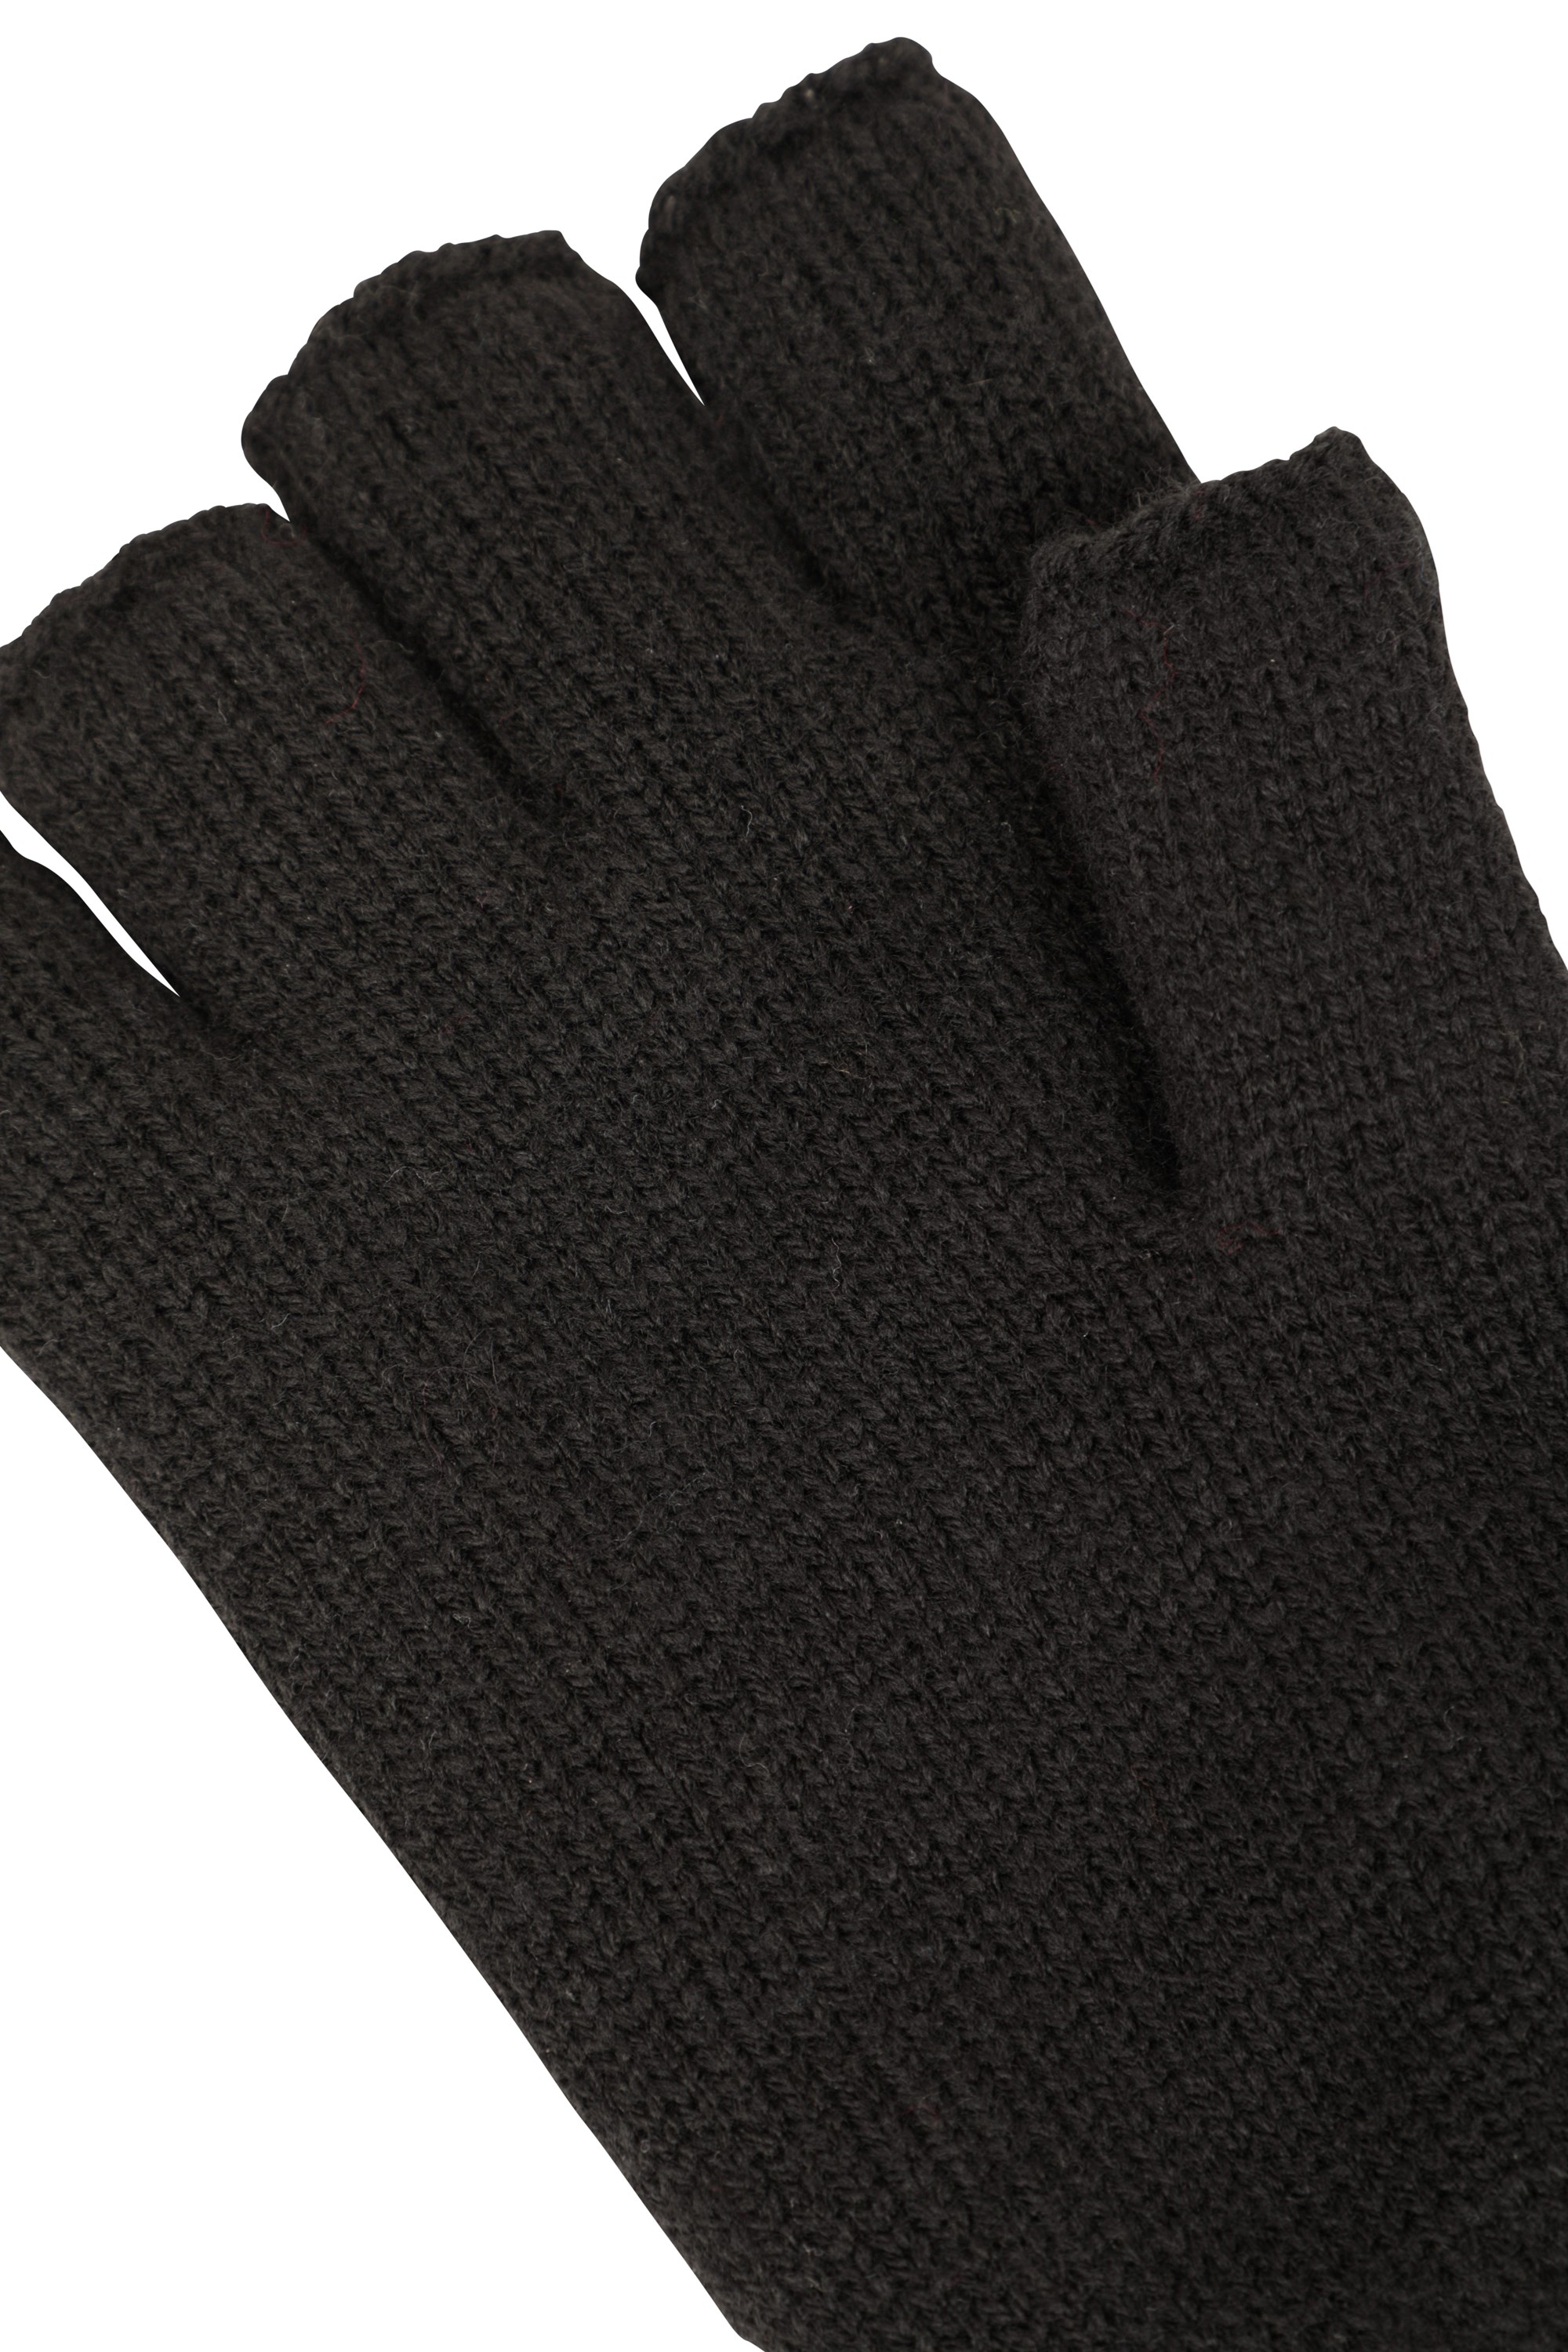 Mountain Warehouse Universal Fingerless Fishing Gloves - Green | Size S